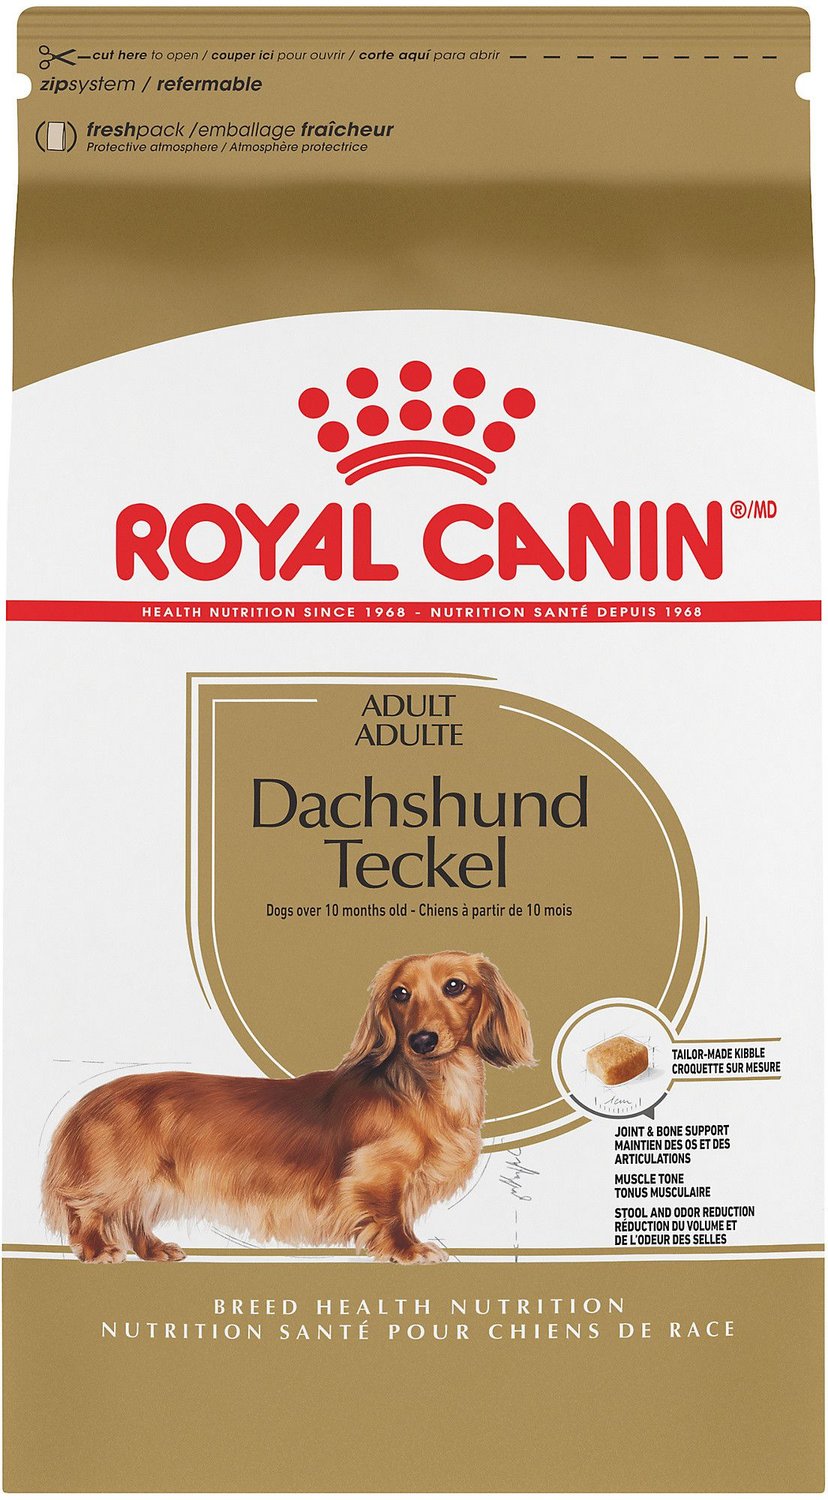 royal canin dachshund dog food